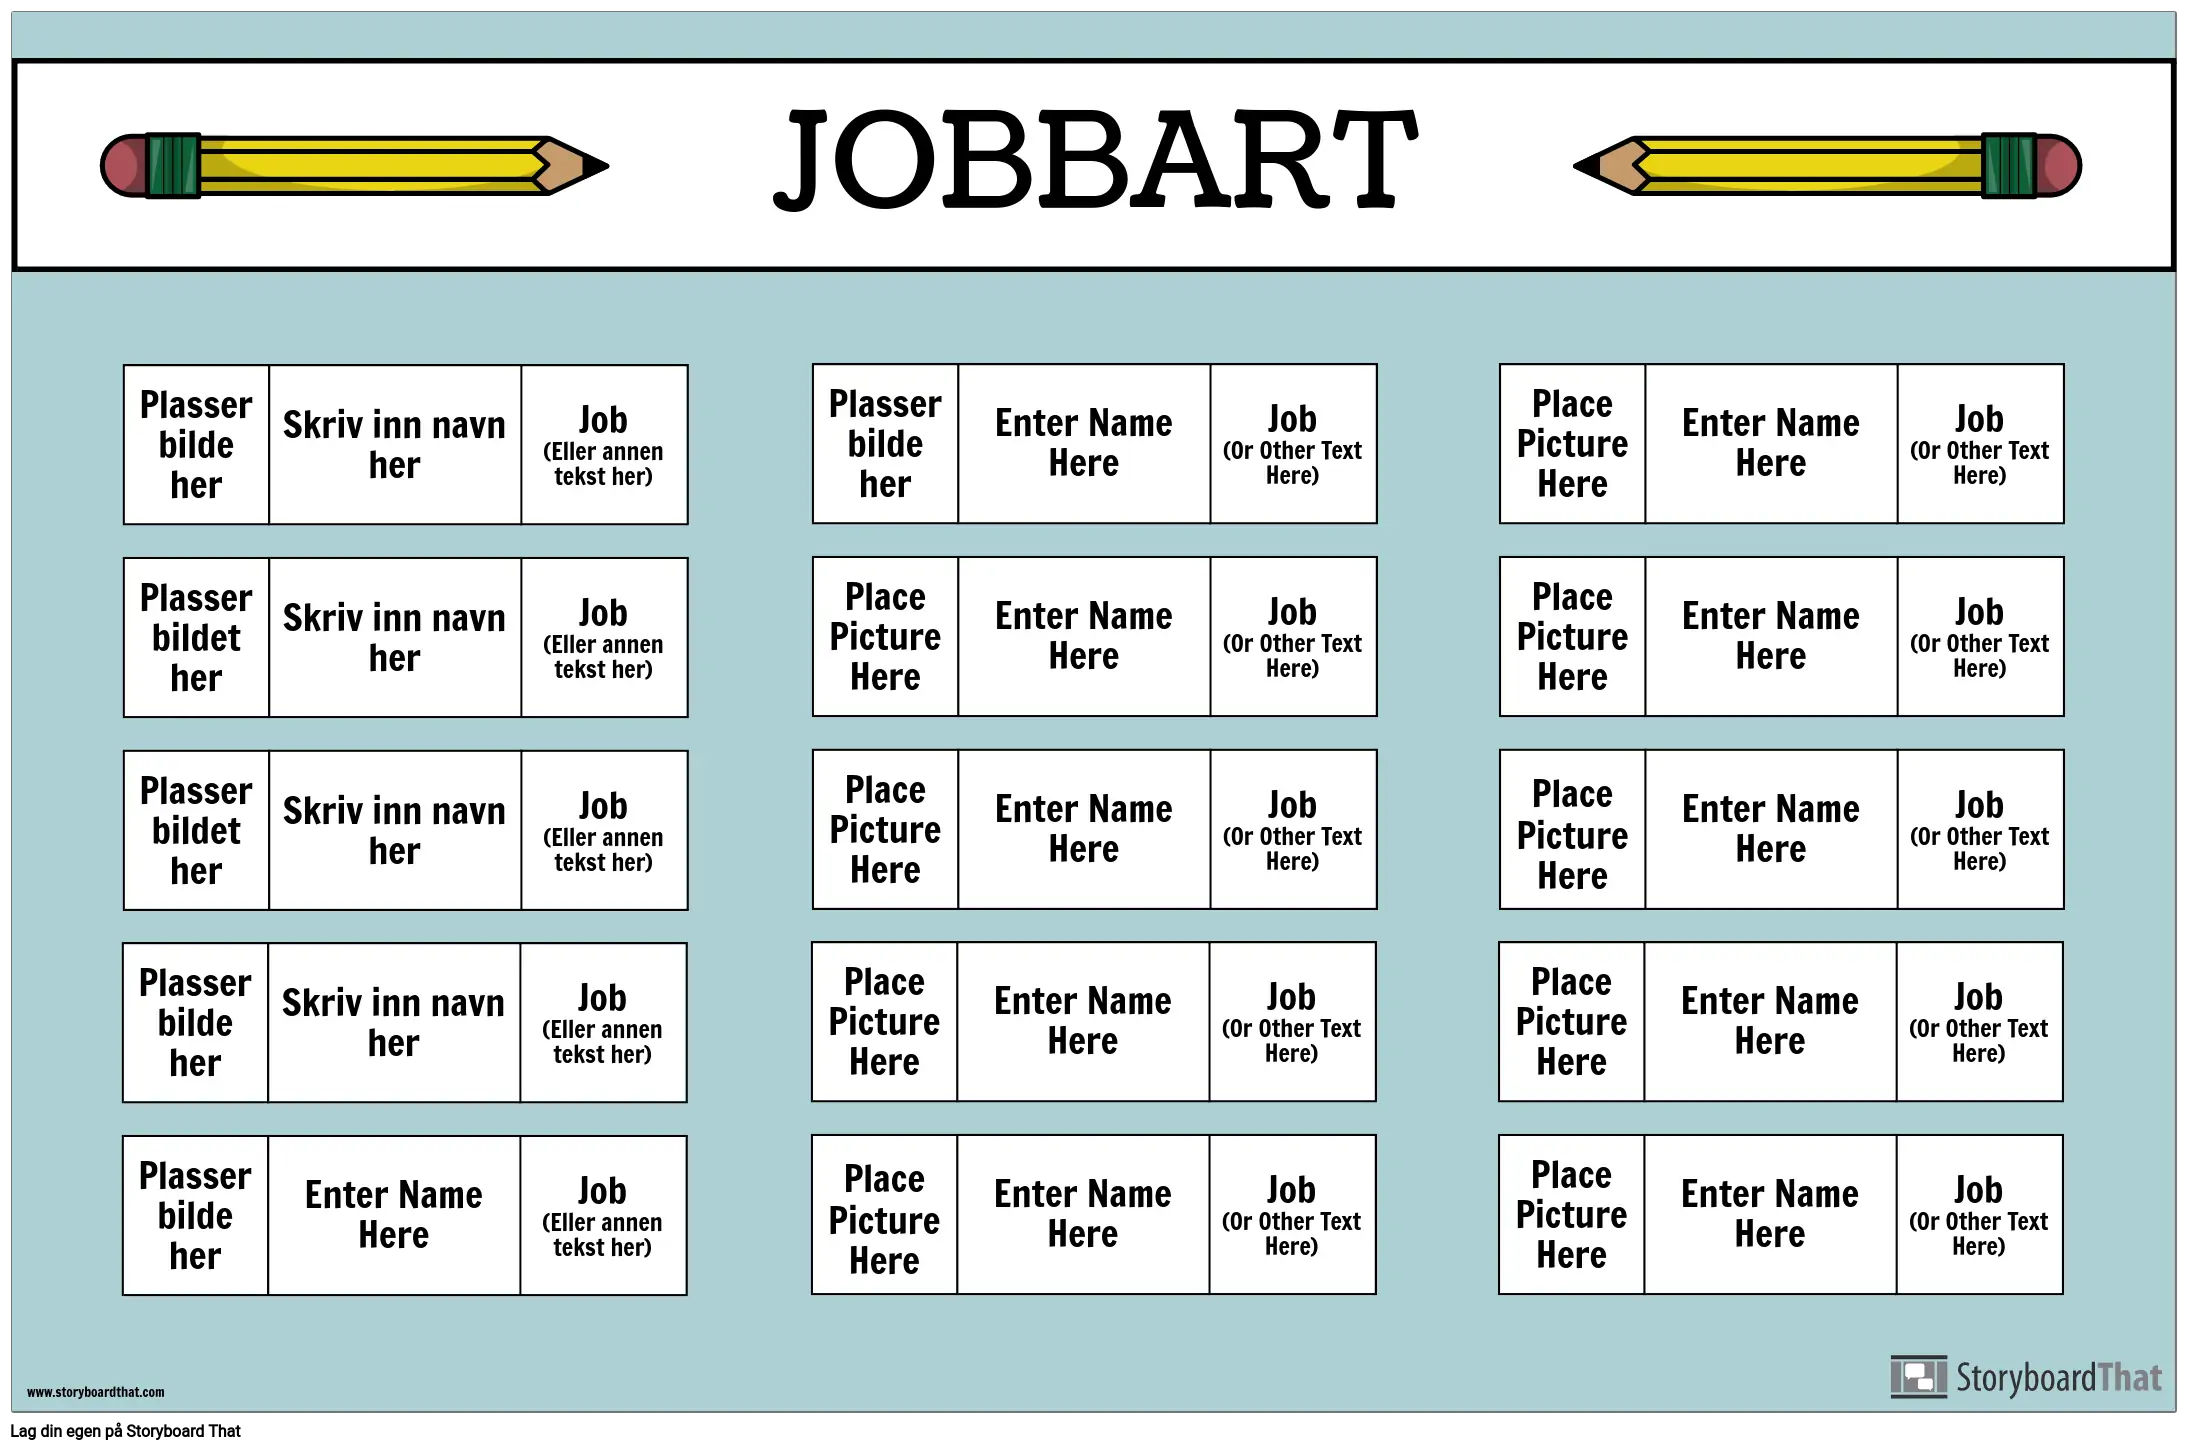 Job Chart Poster